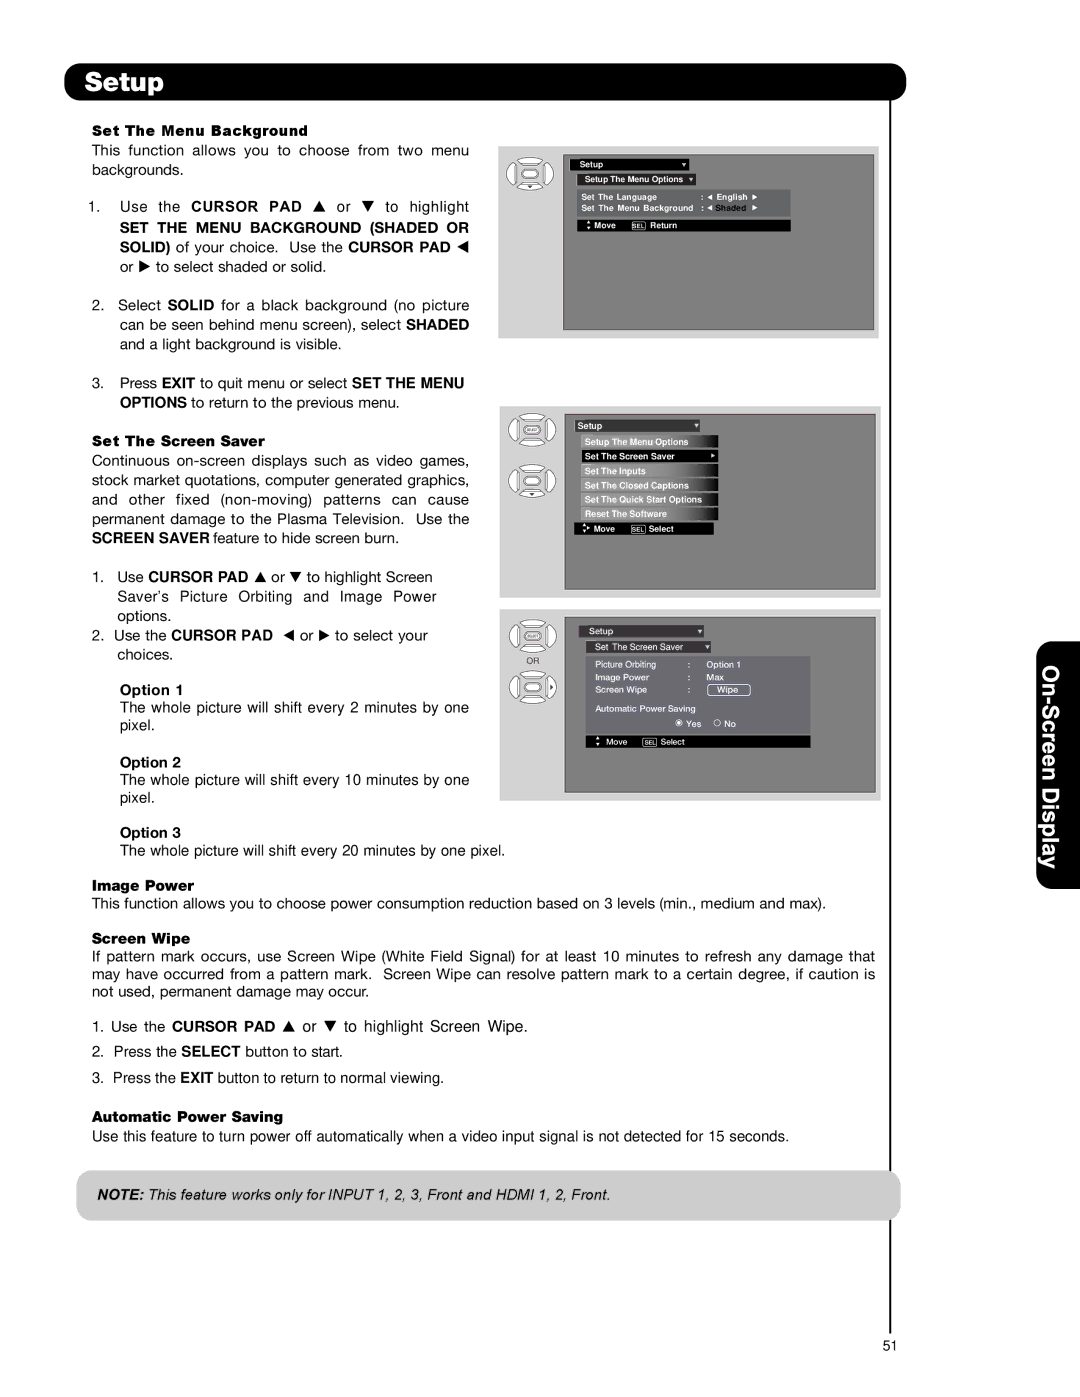 Hitachi P42H401 Set The Menu Background, Set The Screen Saver, Use Cursor PAD or, Option, Image Power, Screen Wipe 